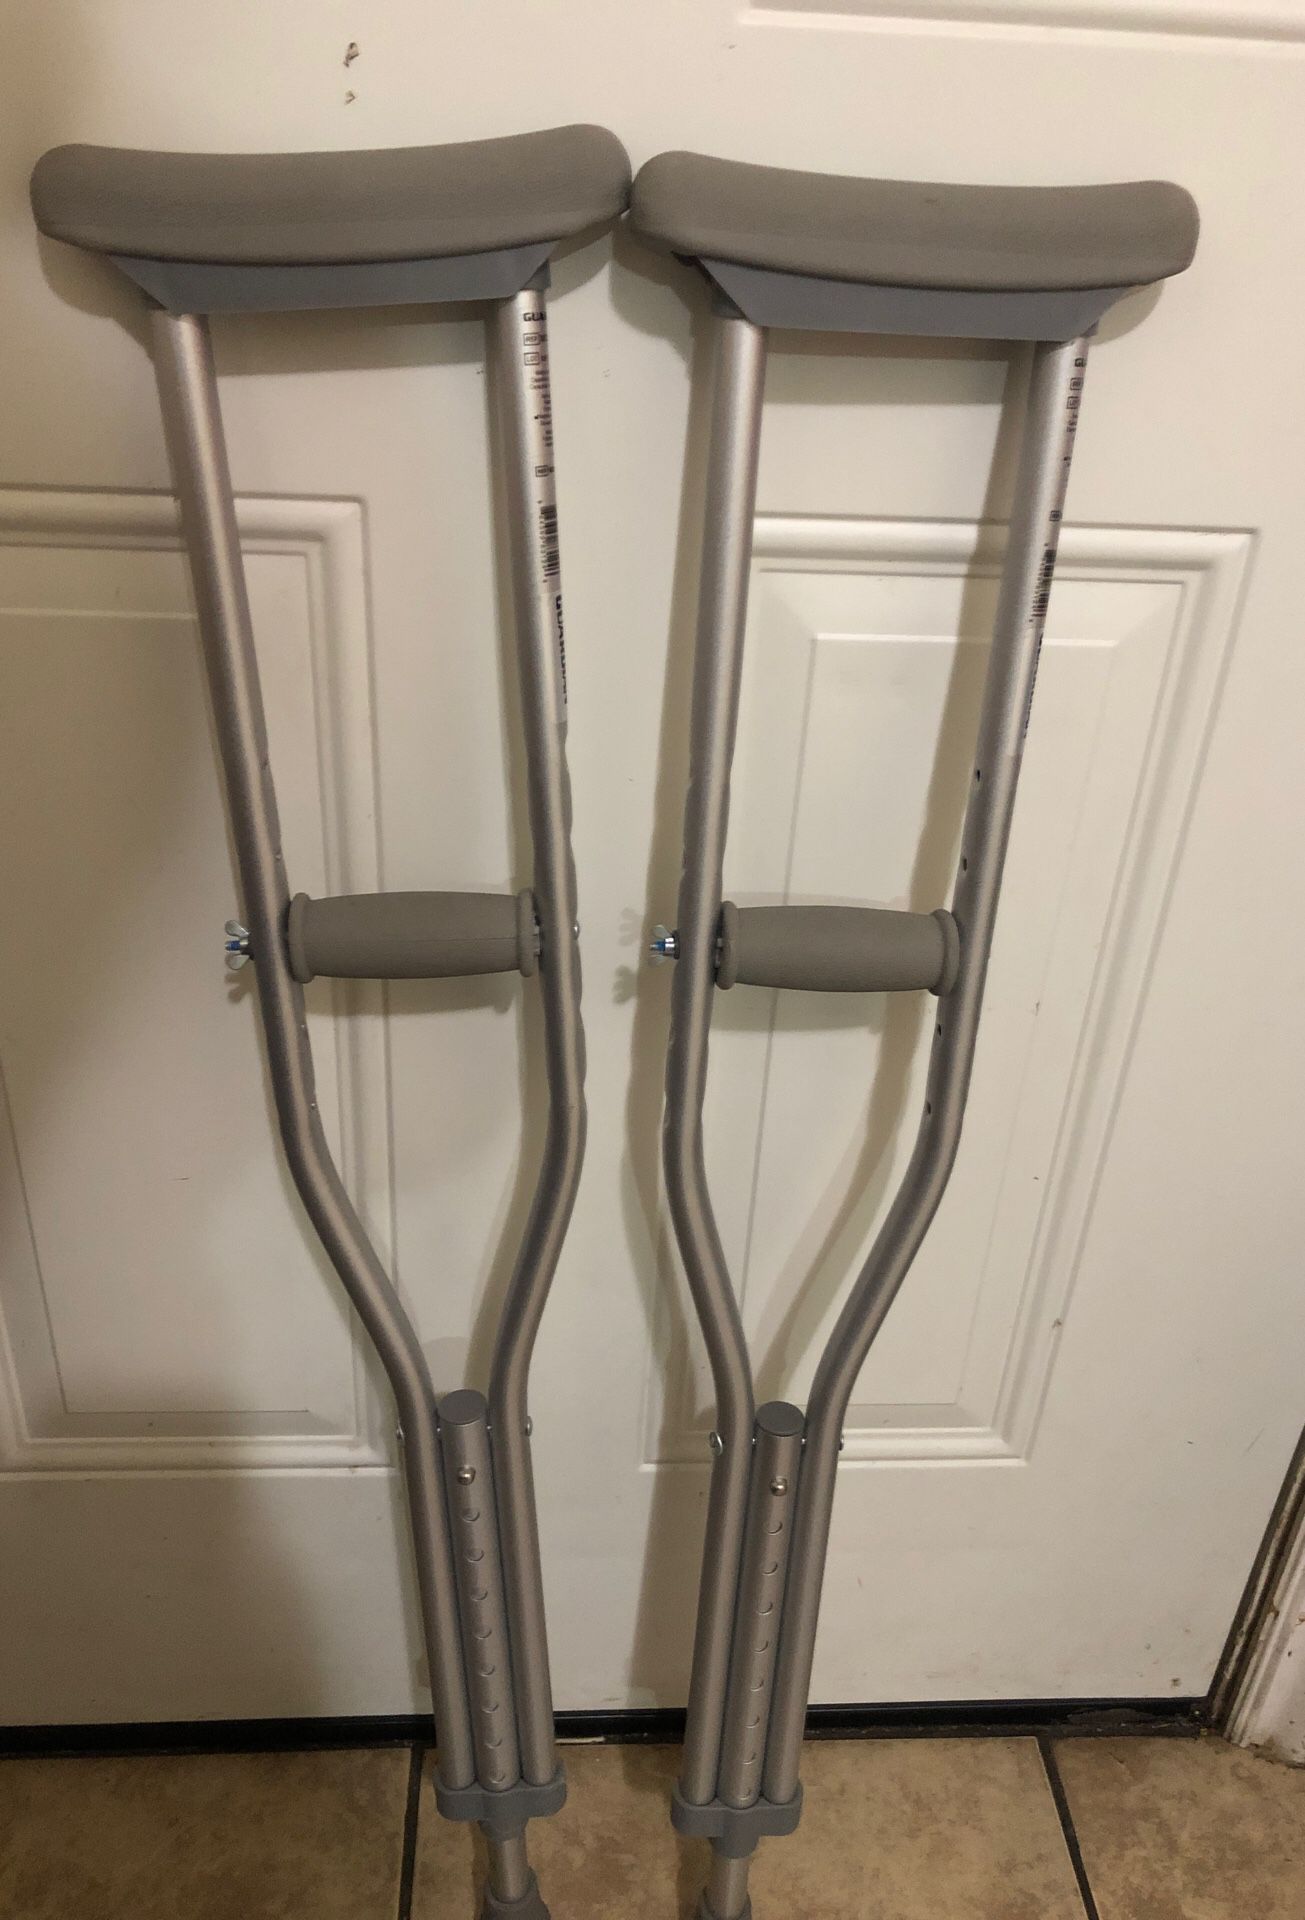 Free kids crutches